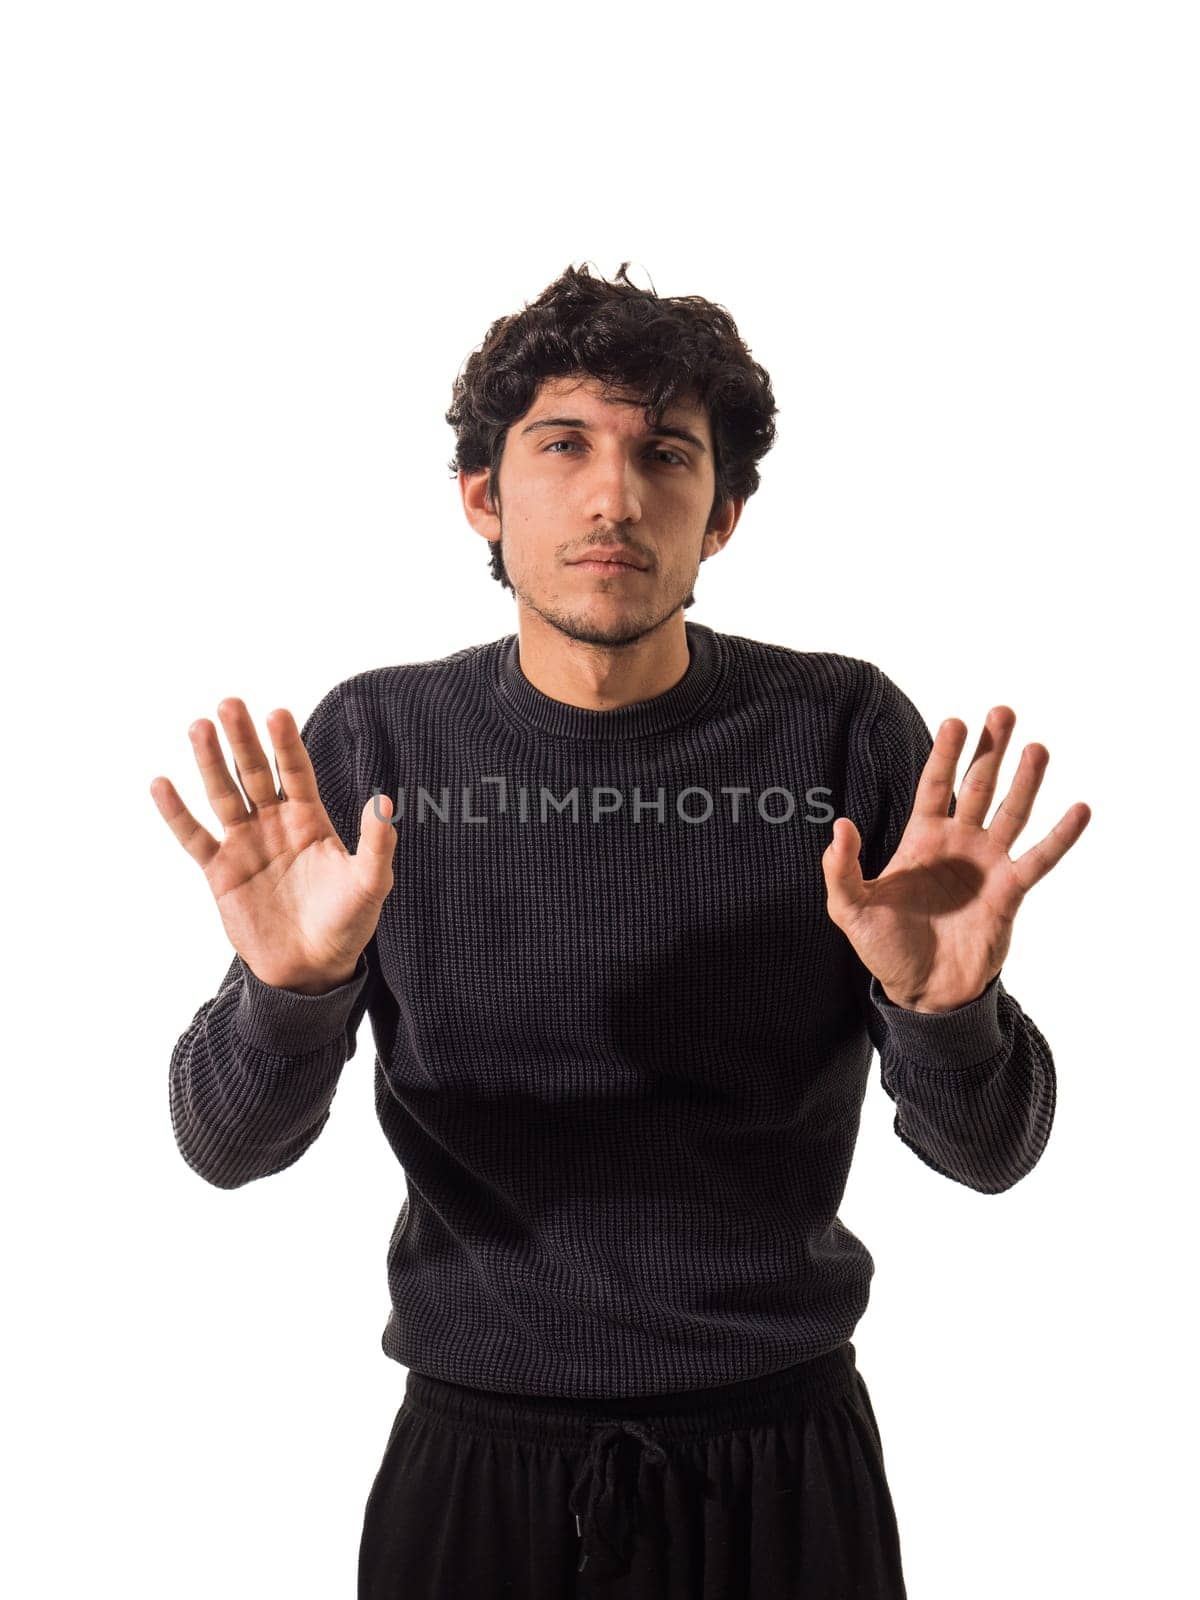 Man in Black Sweater Raising Hands by artofphoto